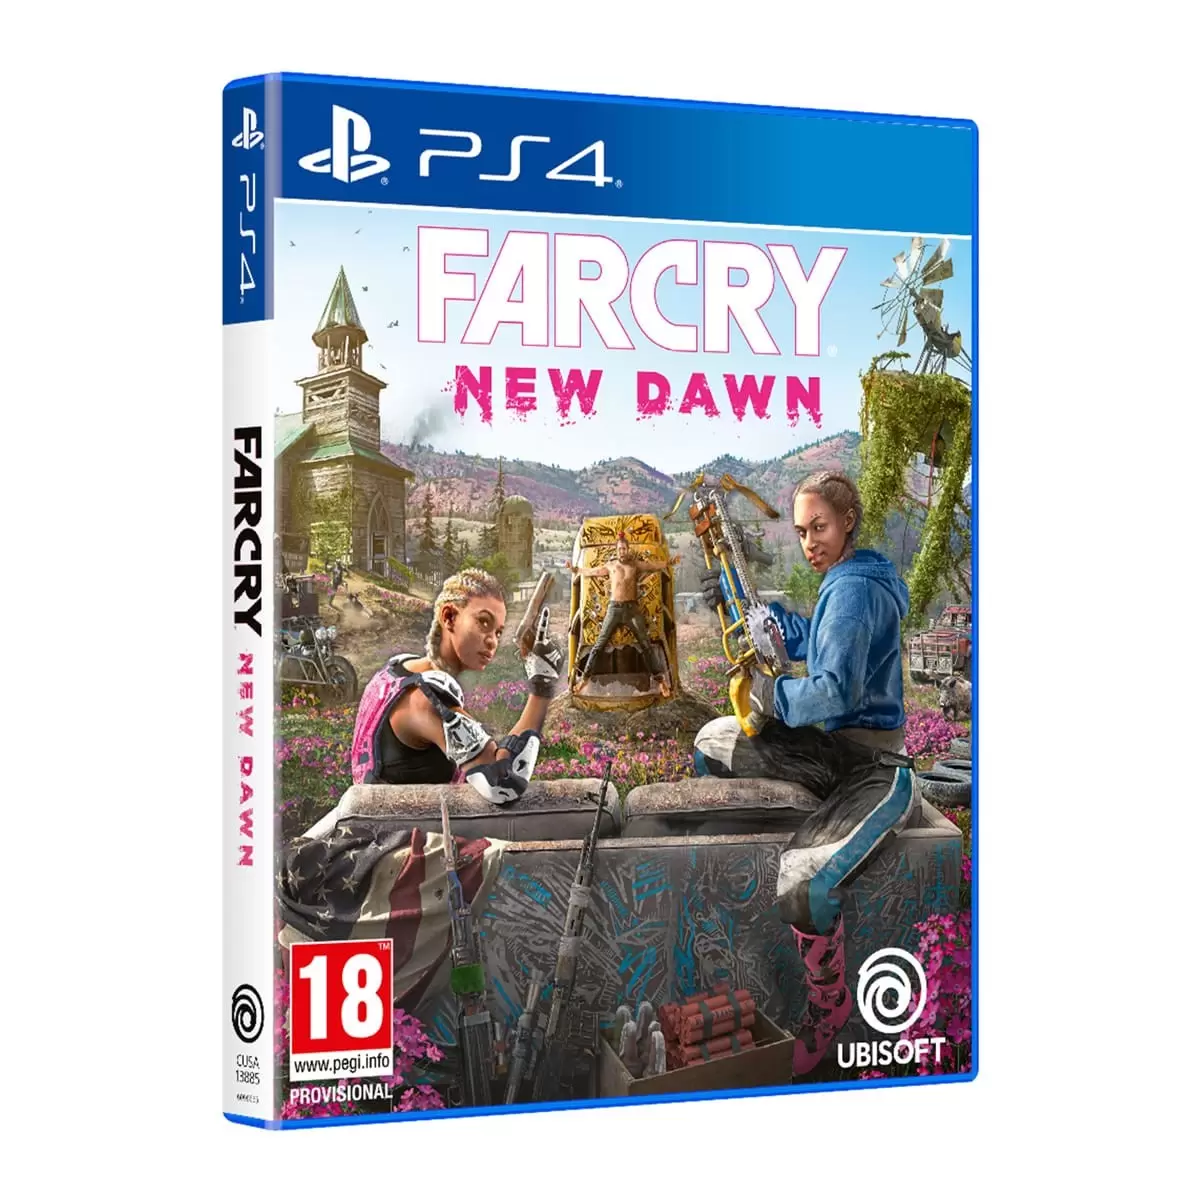 PS4 Games - Far Cry New Dawn